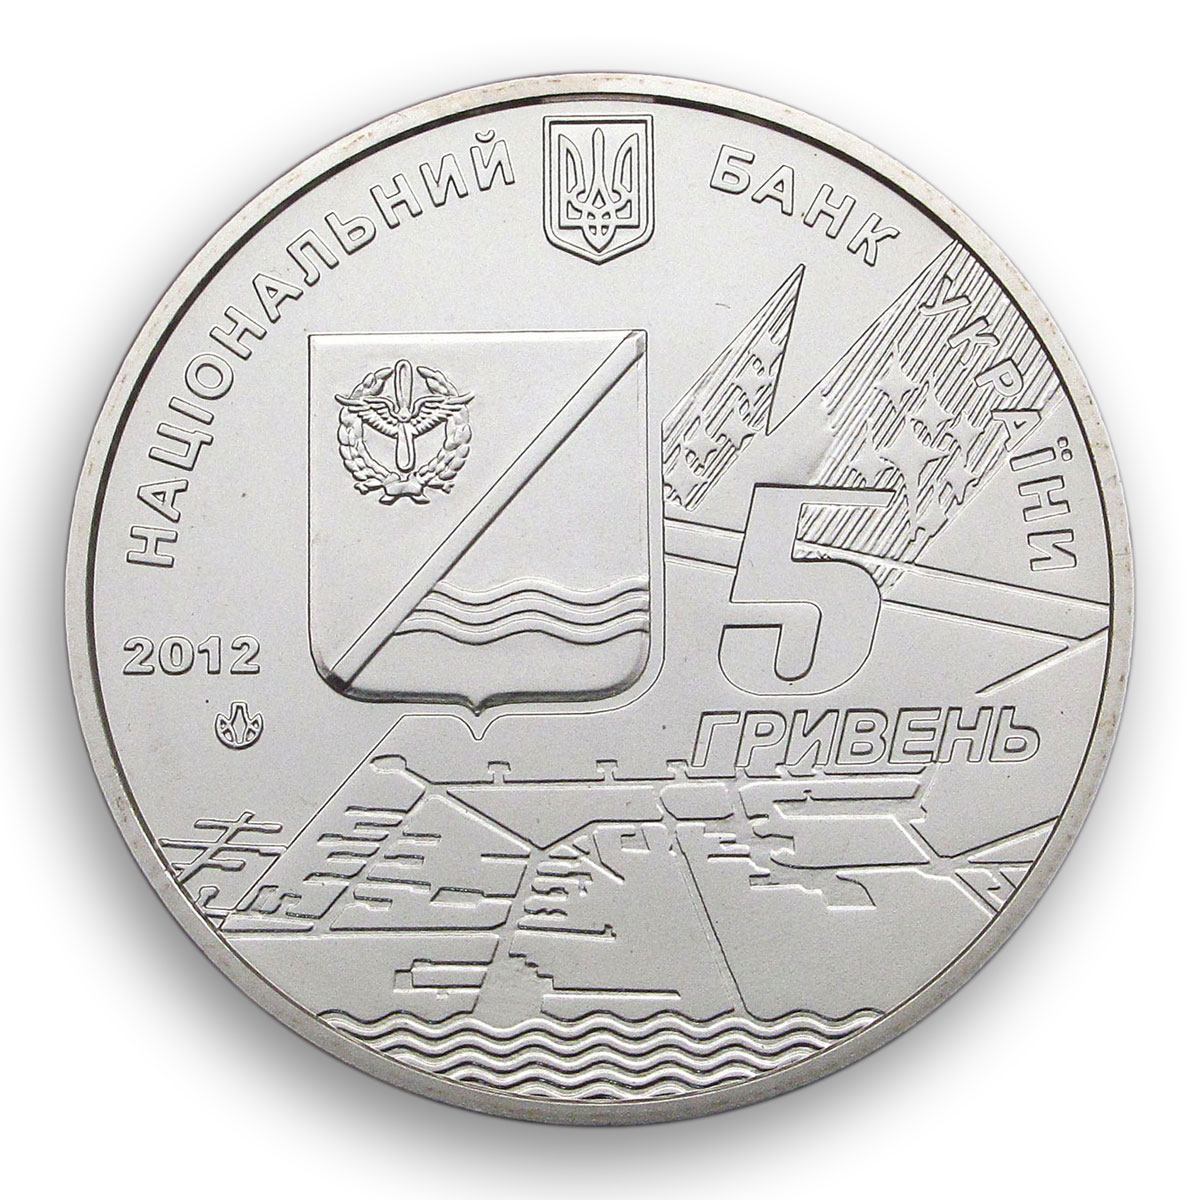 Ukraine 5 hryvnia Kacha Military Aviation School plane history nickel coin 2012